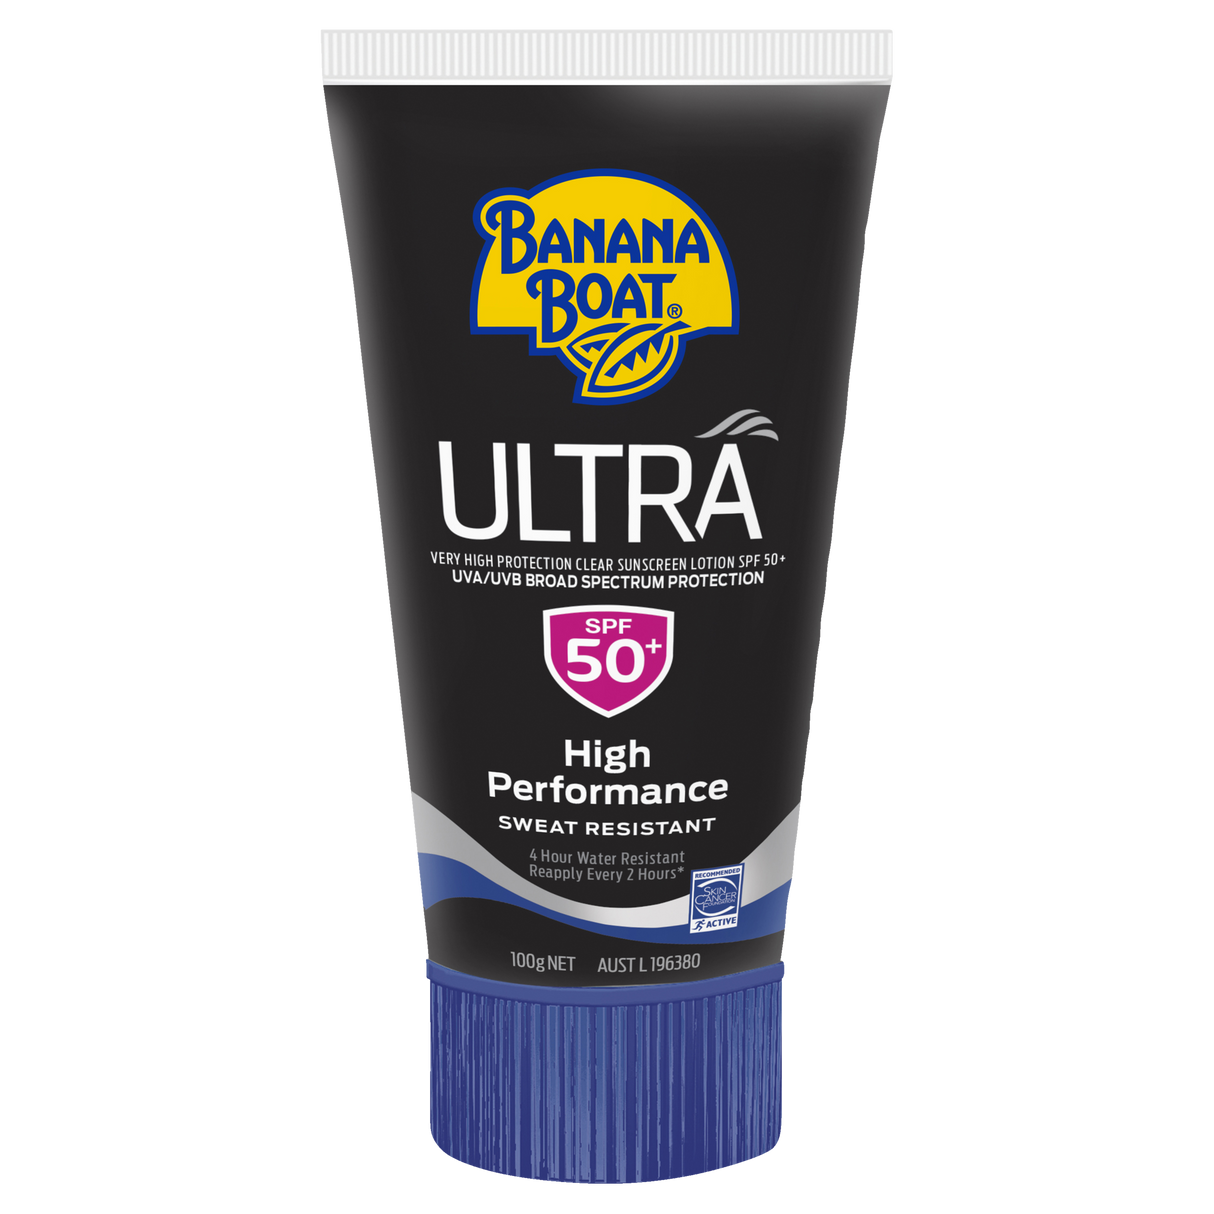 Banana Boat Ultra Sunscreen Lotion SPF 50+ 100g